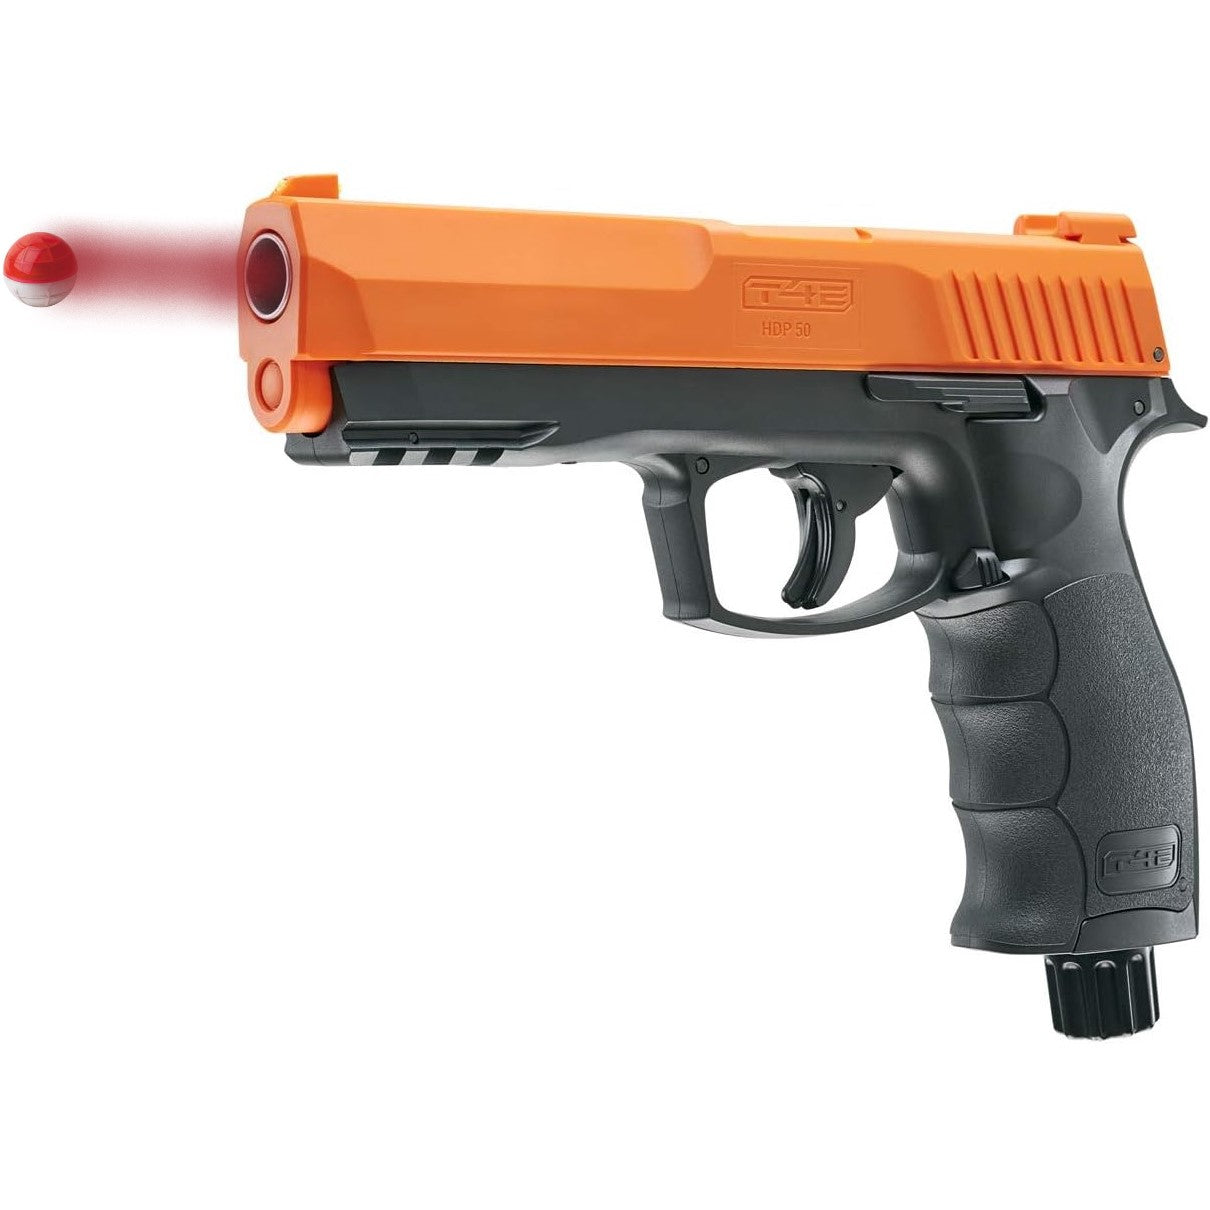 Prepared 2 Protect HDP 50 Self-Defense Pepper Ball Gun